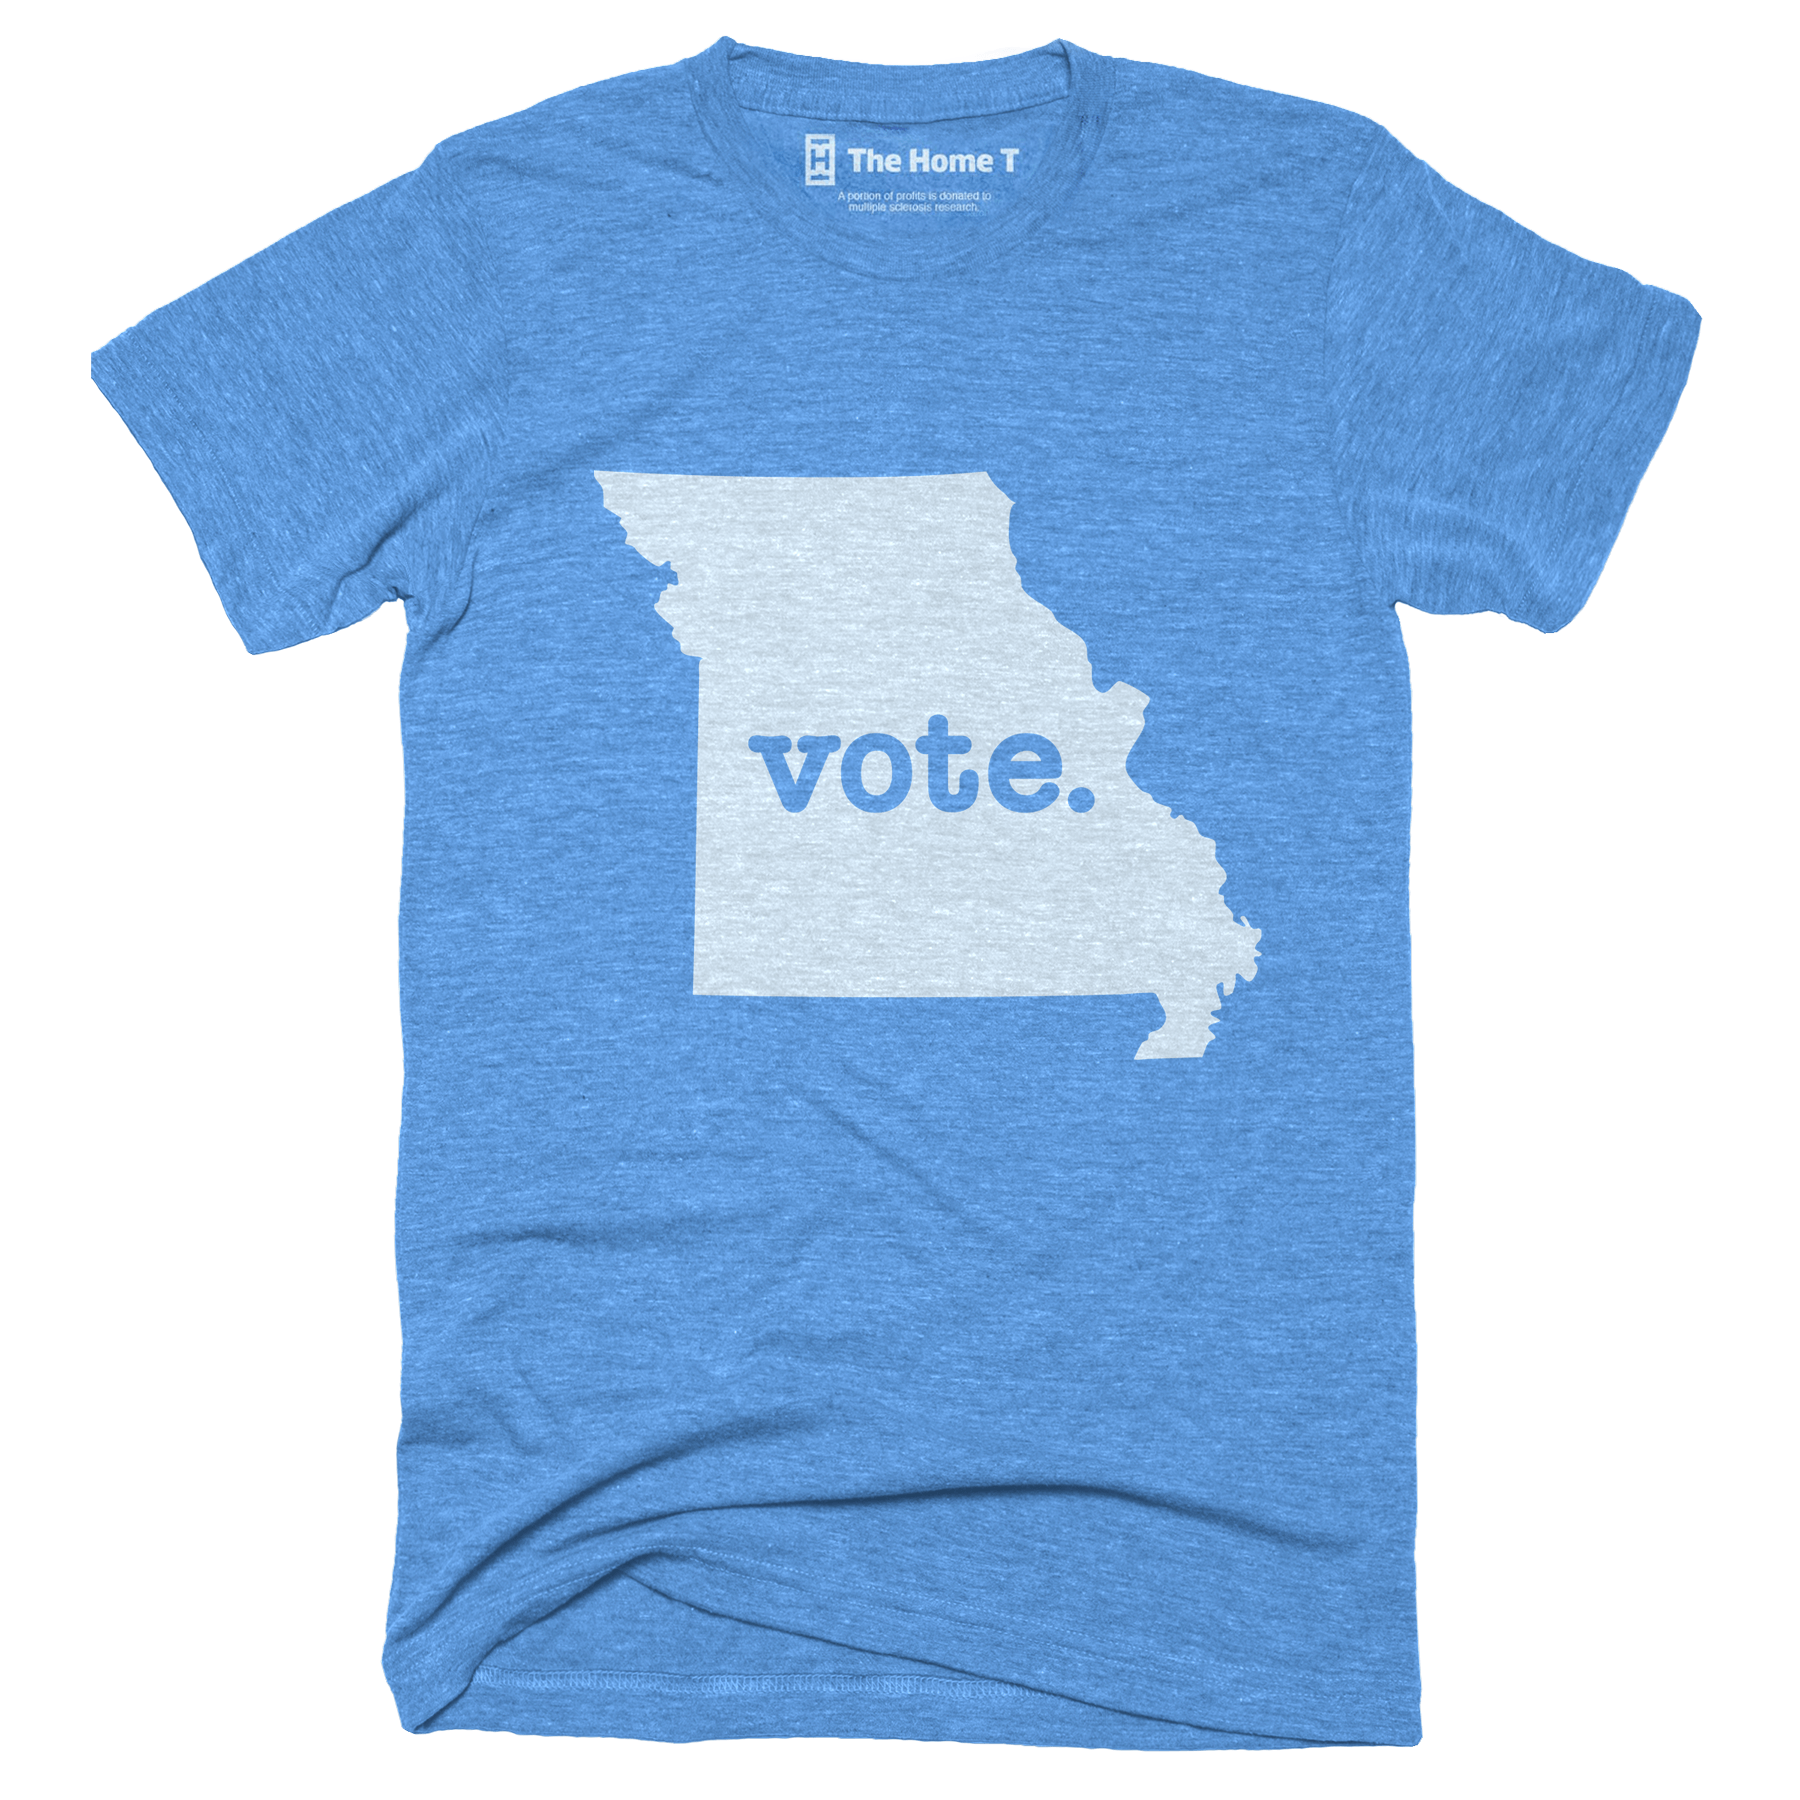 Missouri Vote Home T Vote The Home T XS Blue